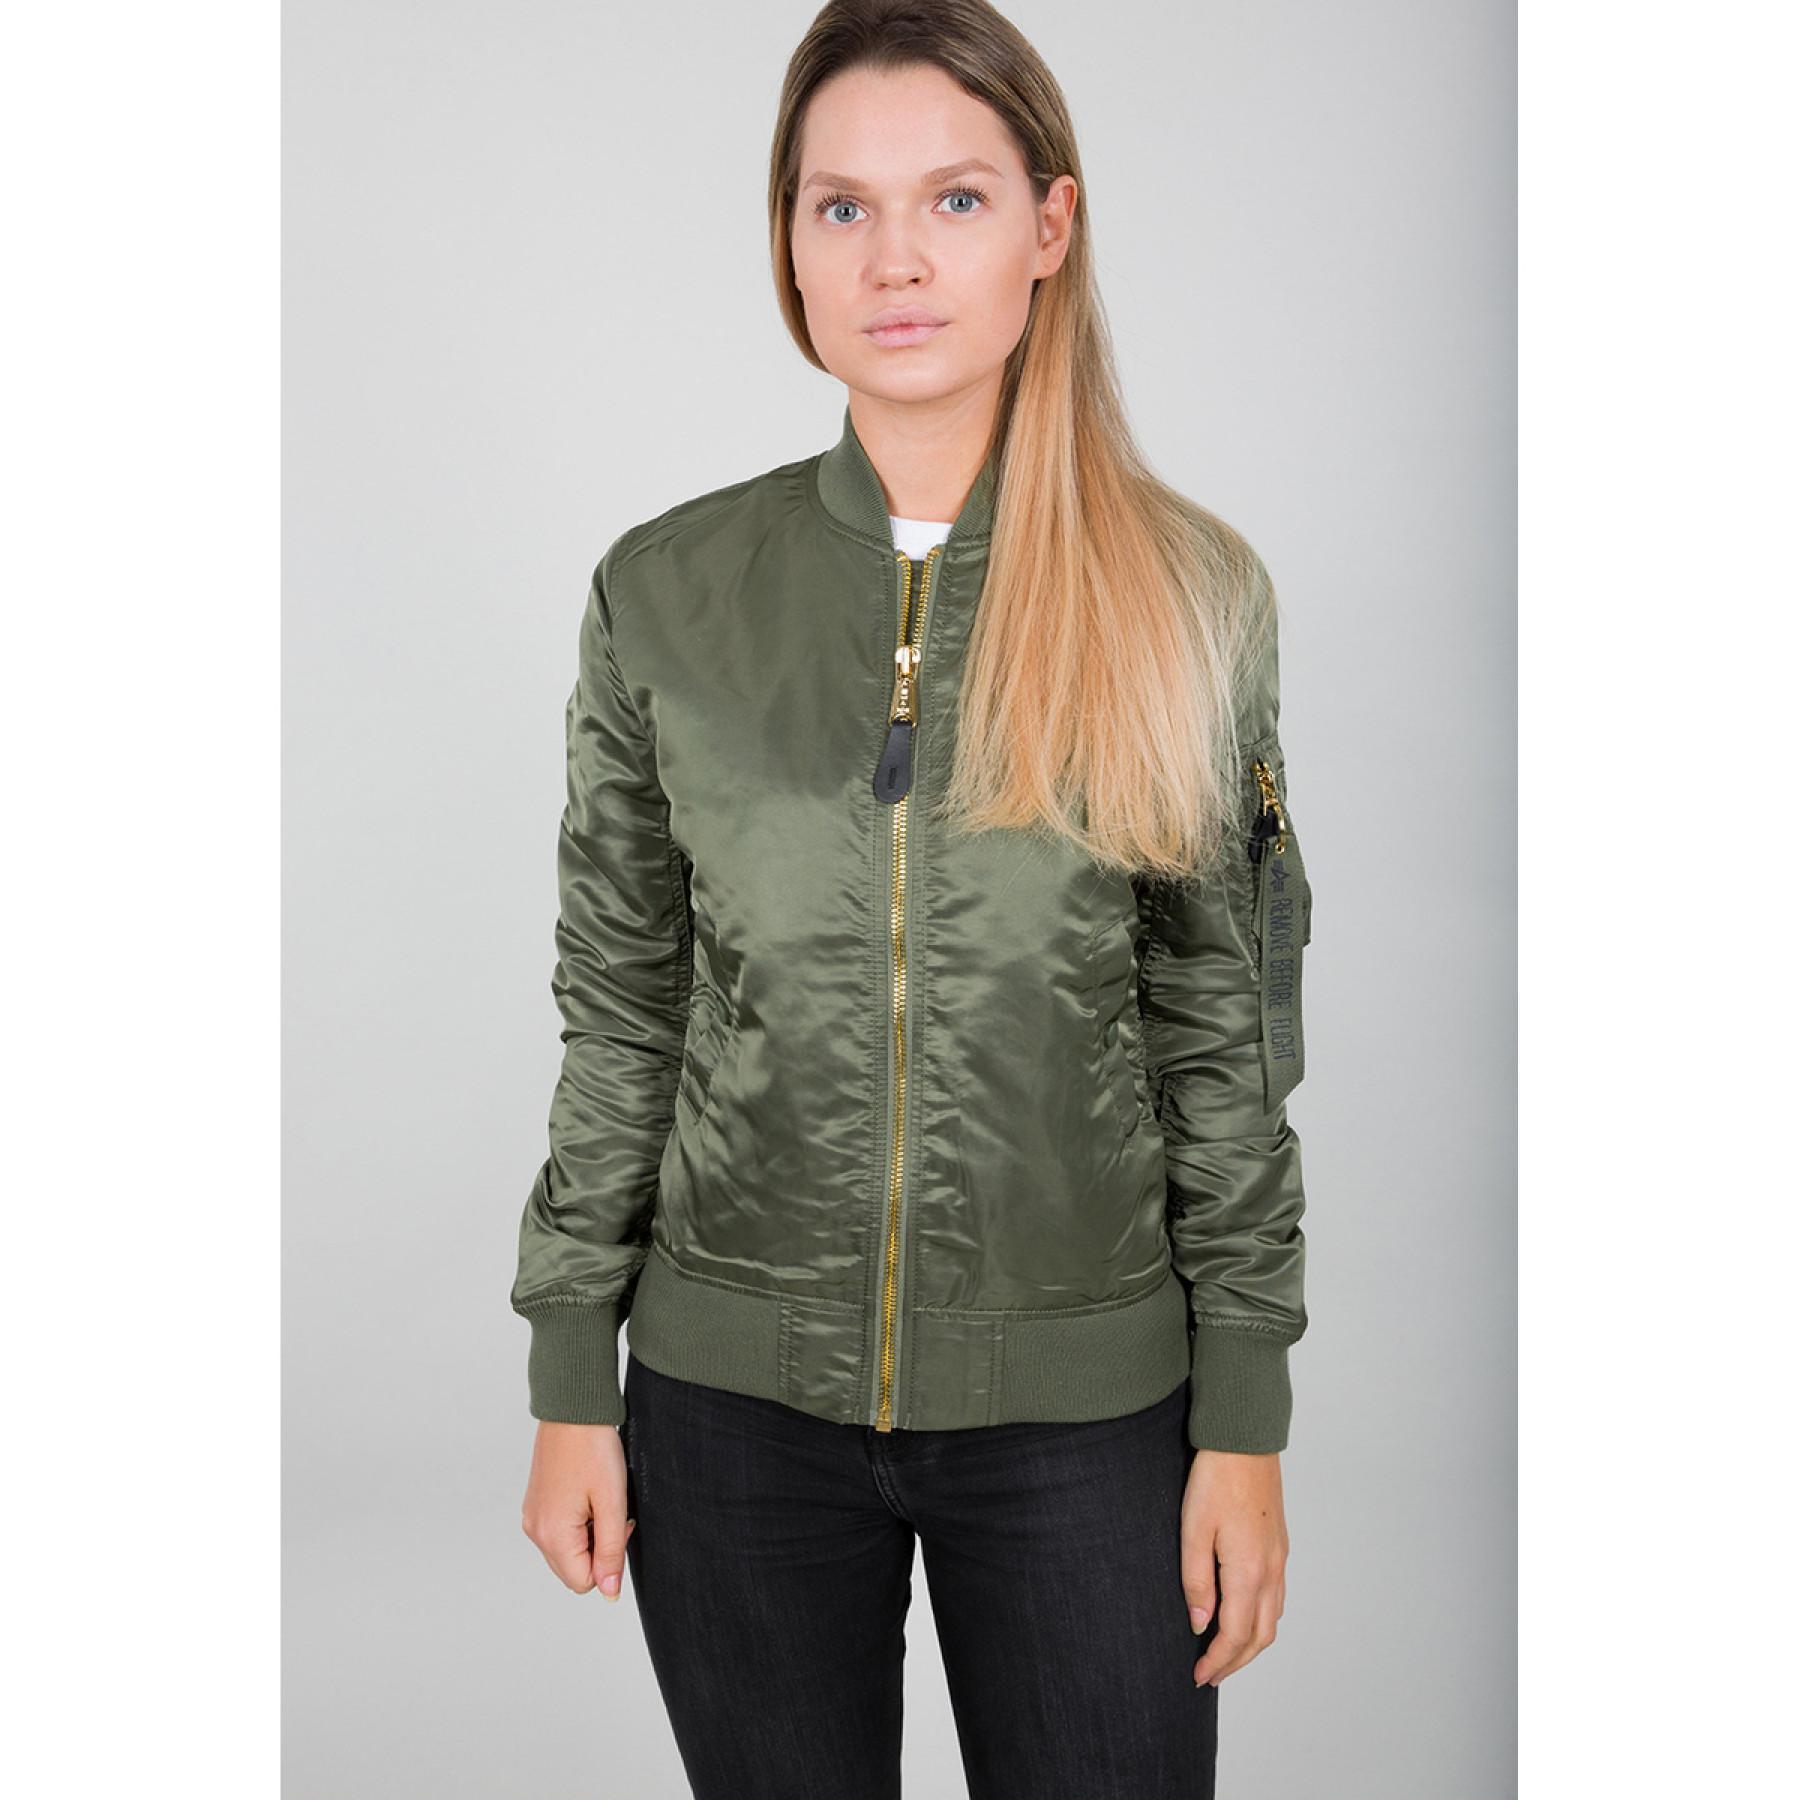 Women's jacket Alpha Industries MA-1 VF LW